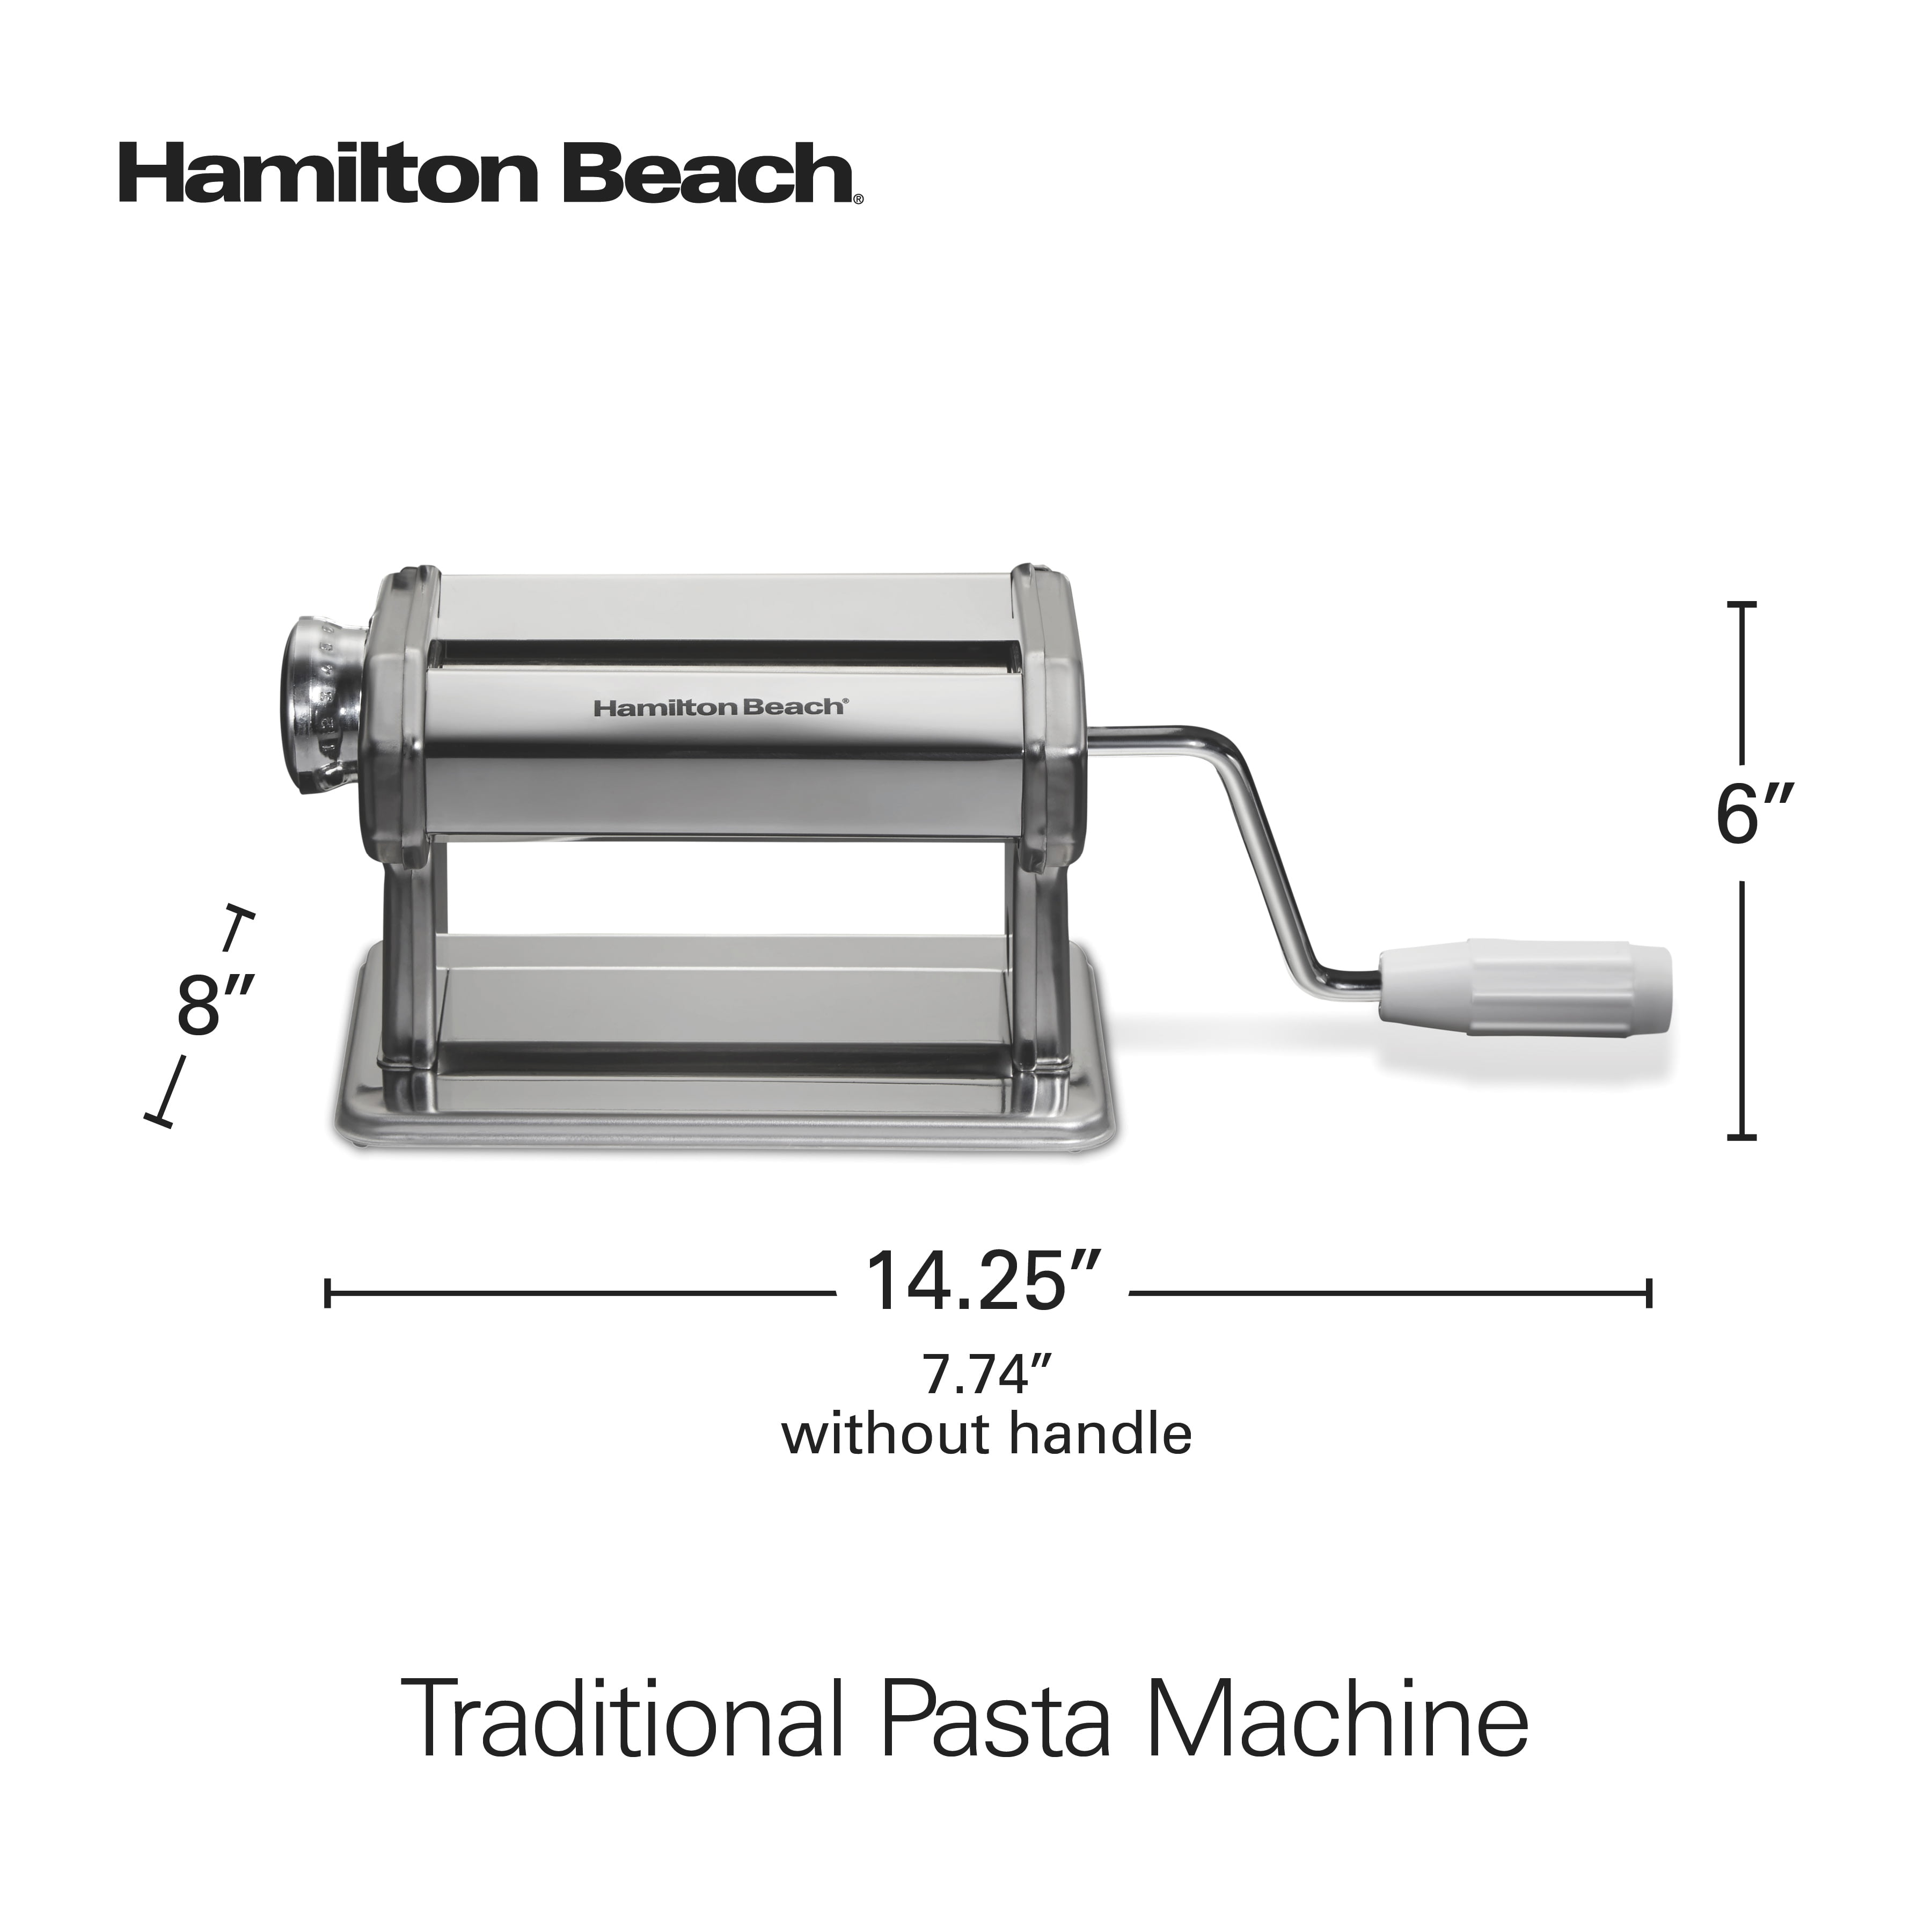 Hamilton Beach White Electric Pasta Maker 86650 - The Home Depot